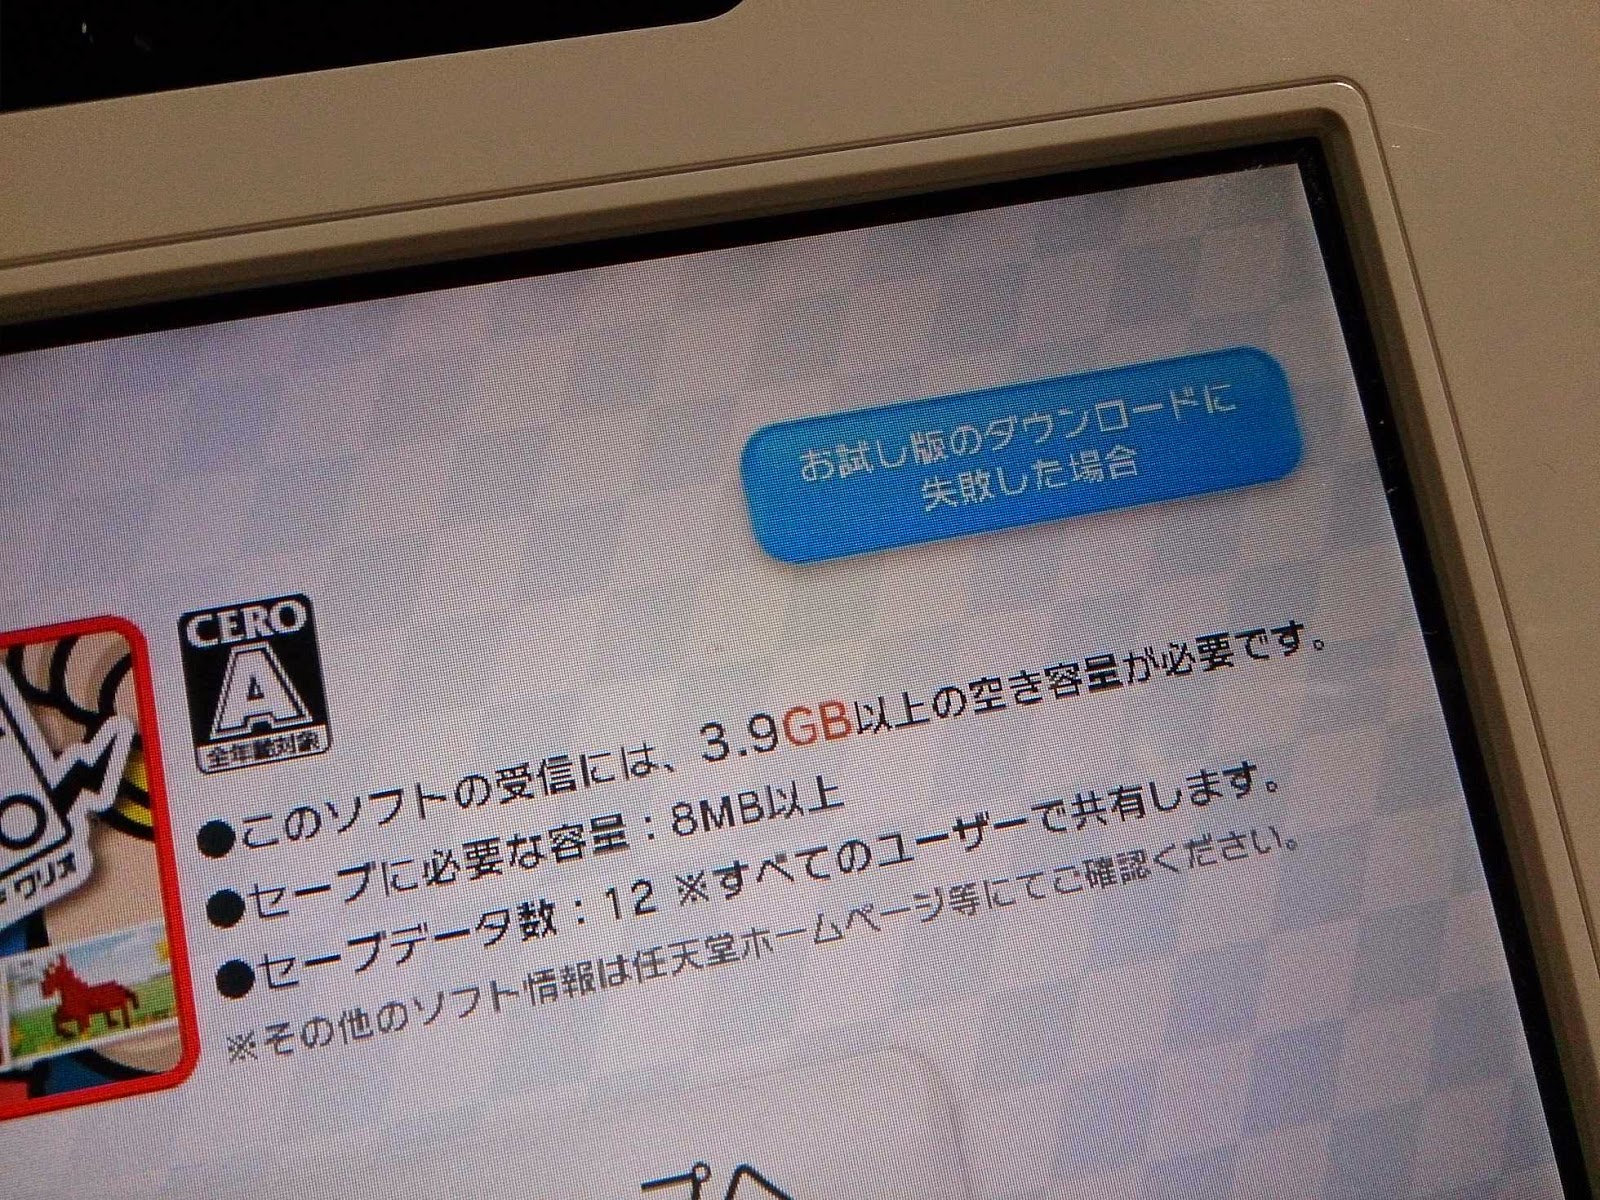 akiraの暇を晒す日記帳的な(暇晒帳): WiiUの「マリオカート8」早期購入者特典「2本選んで1か月無料お試しキャンペーン」のやり方と報告